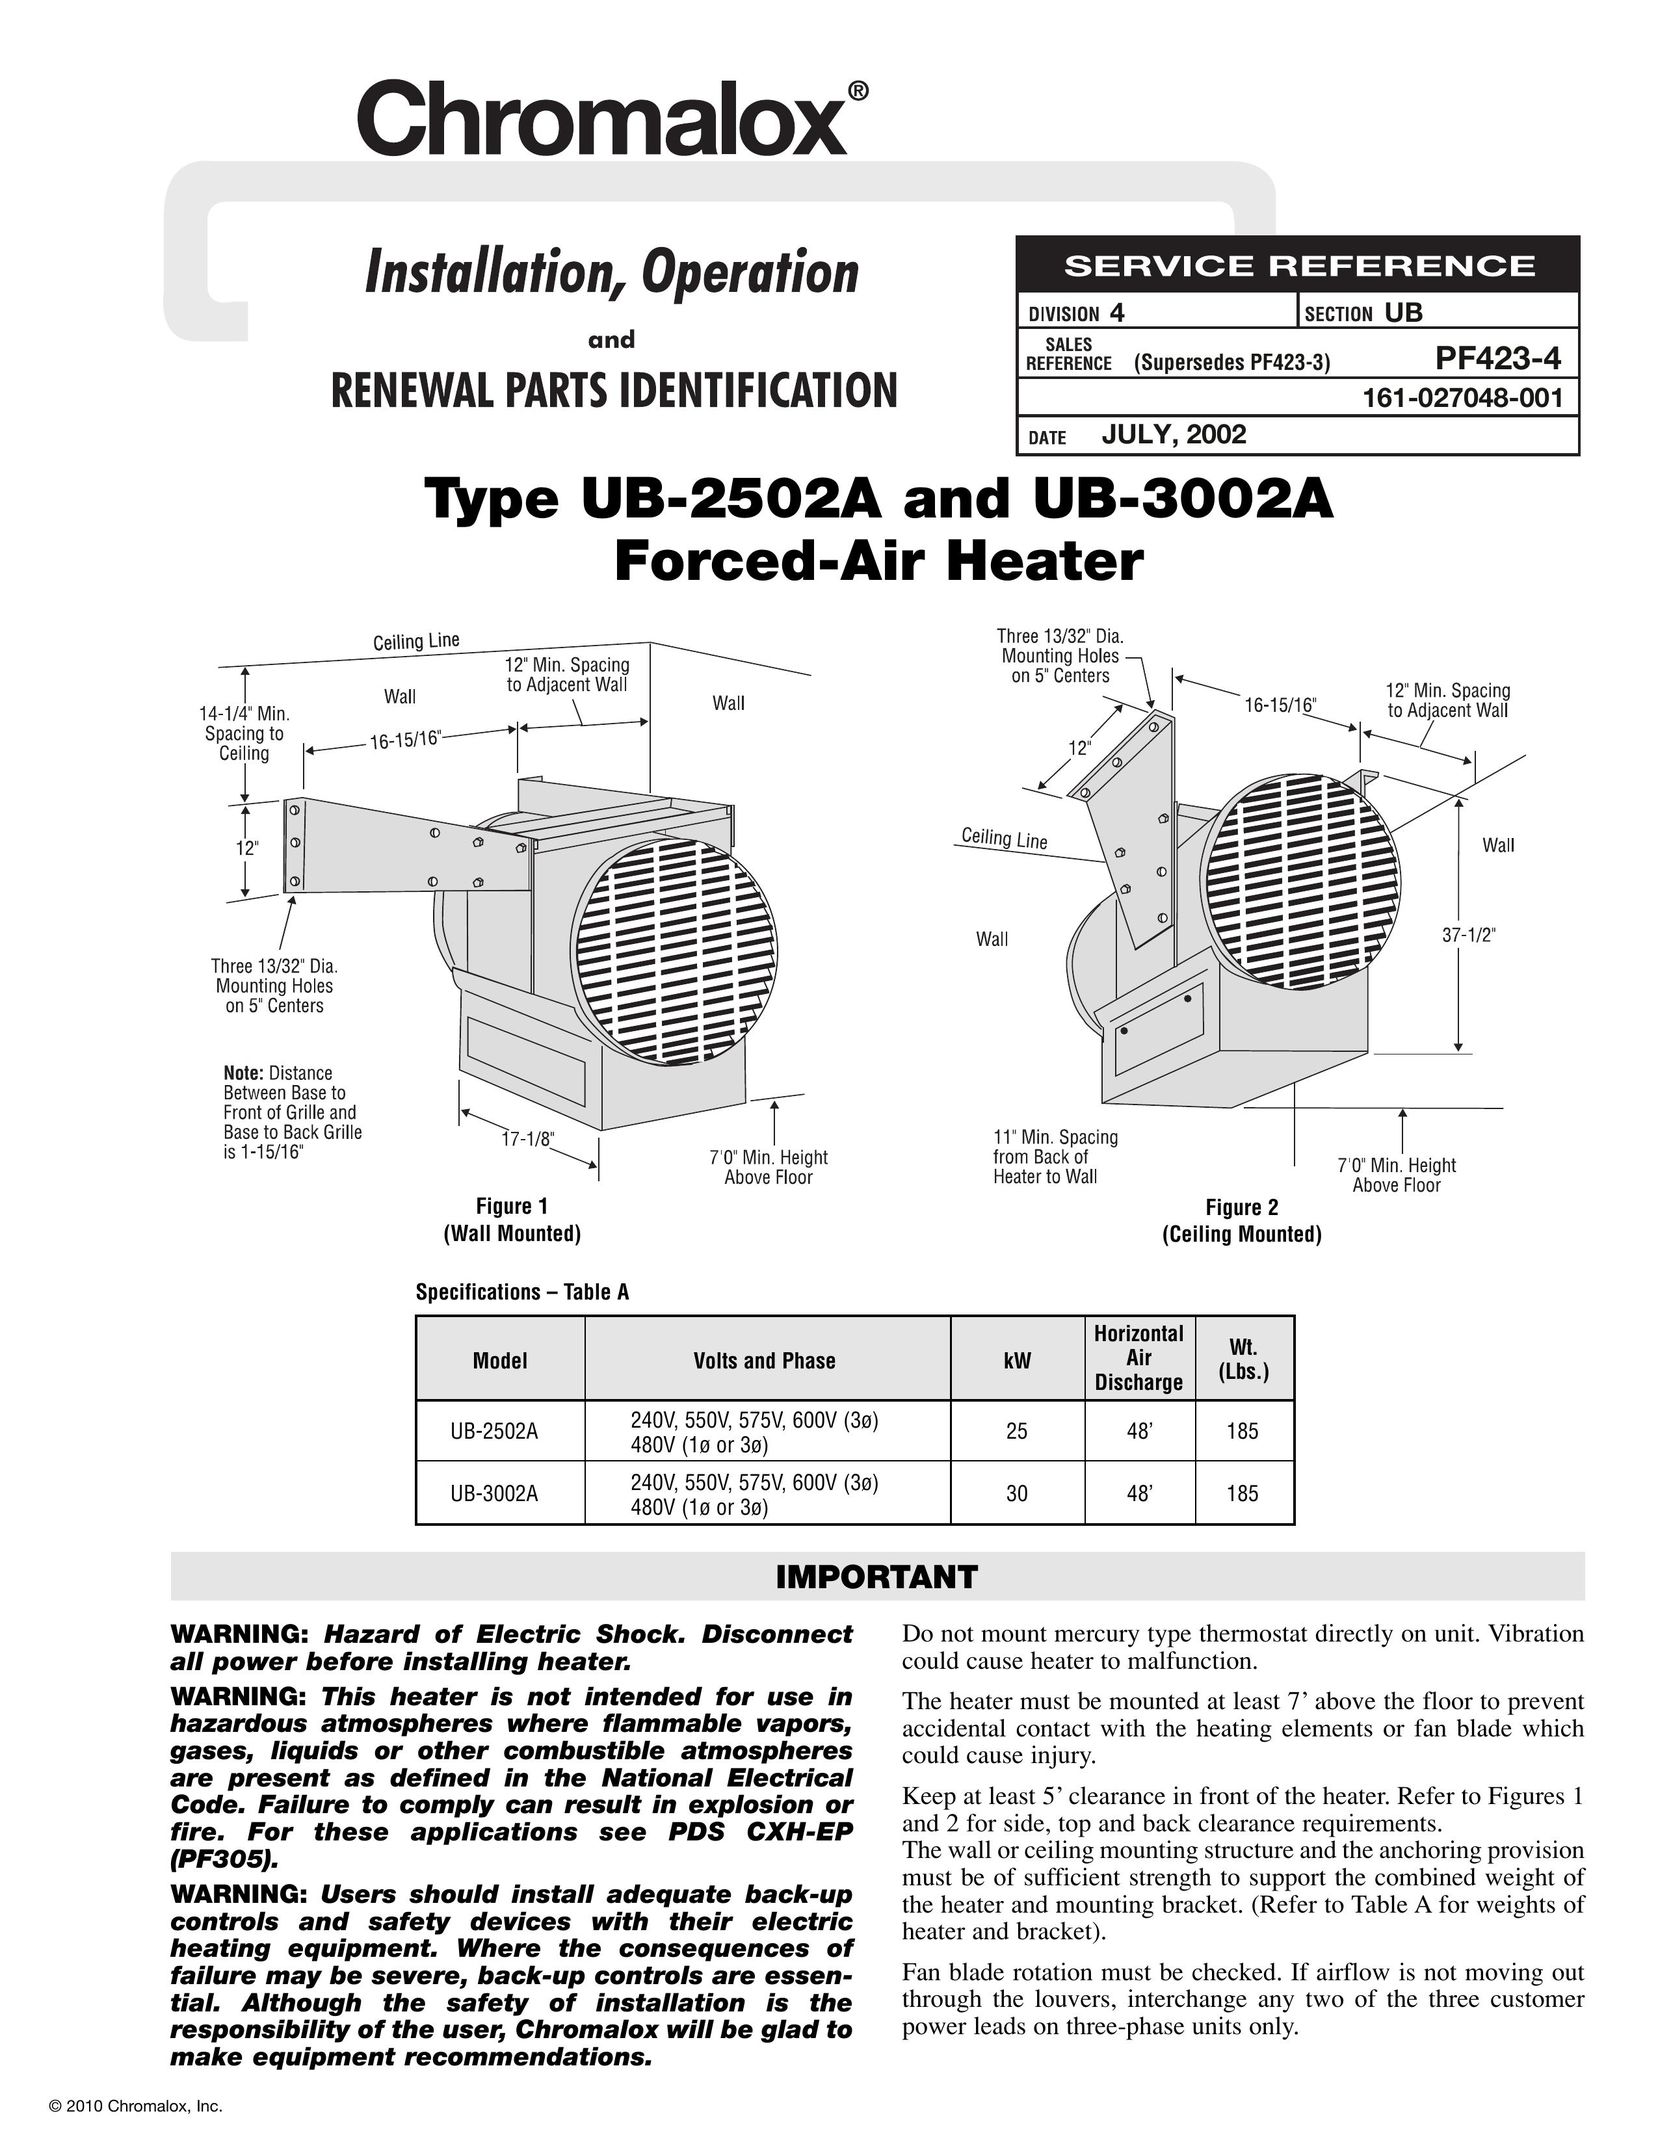 Chromalox UB-3002A Air Conditioner User Manual